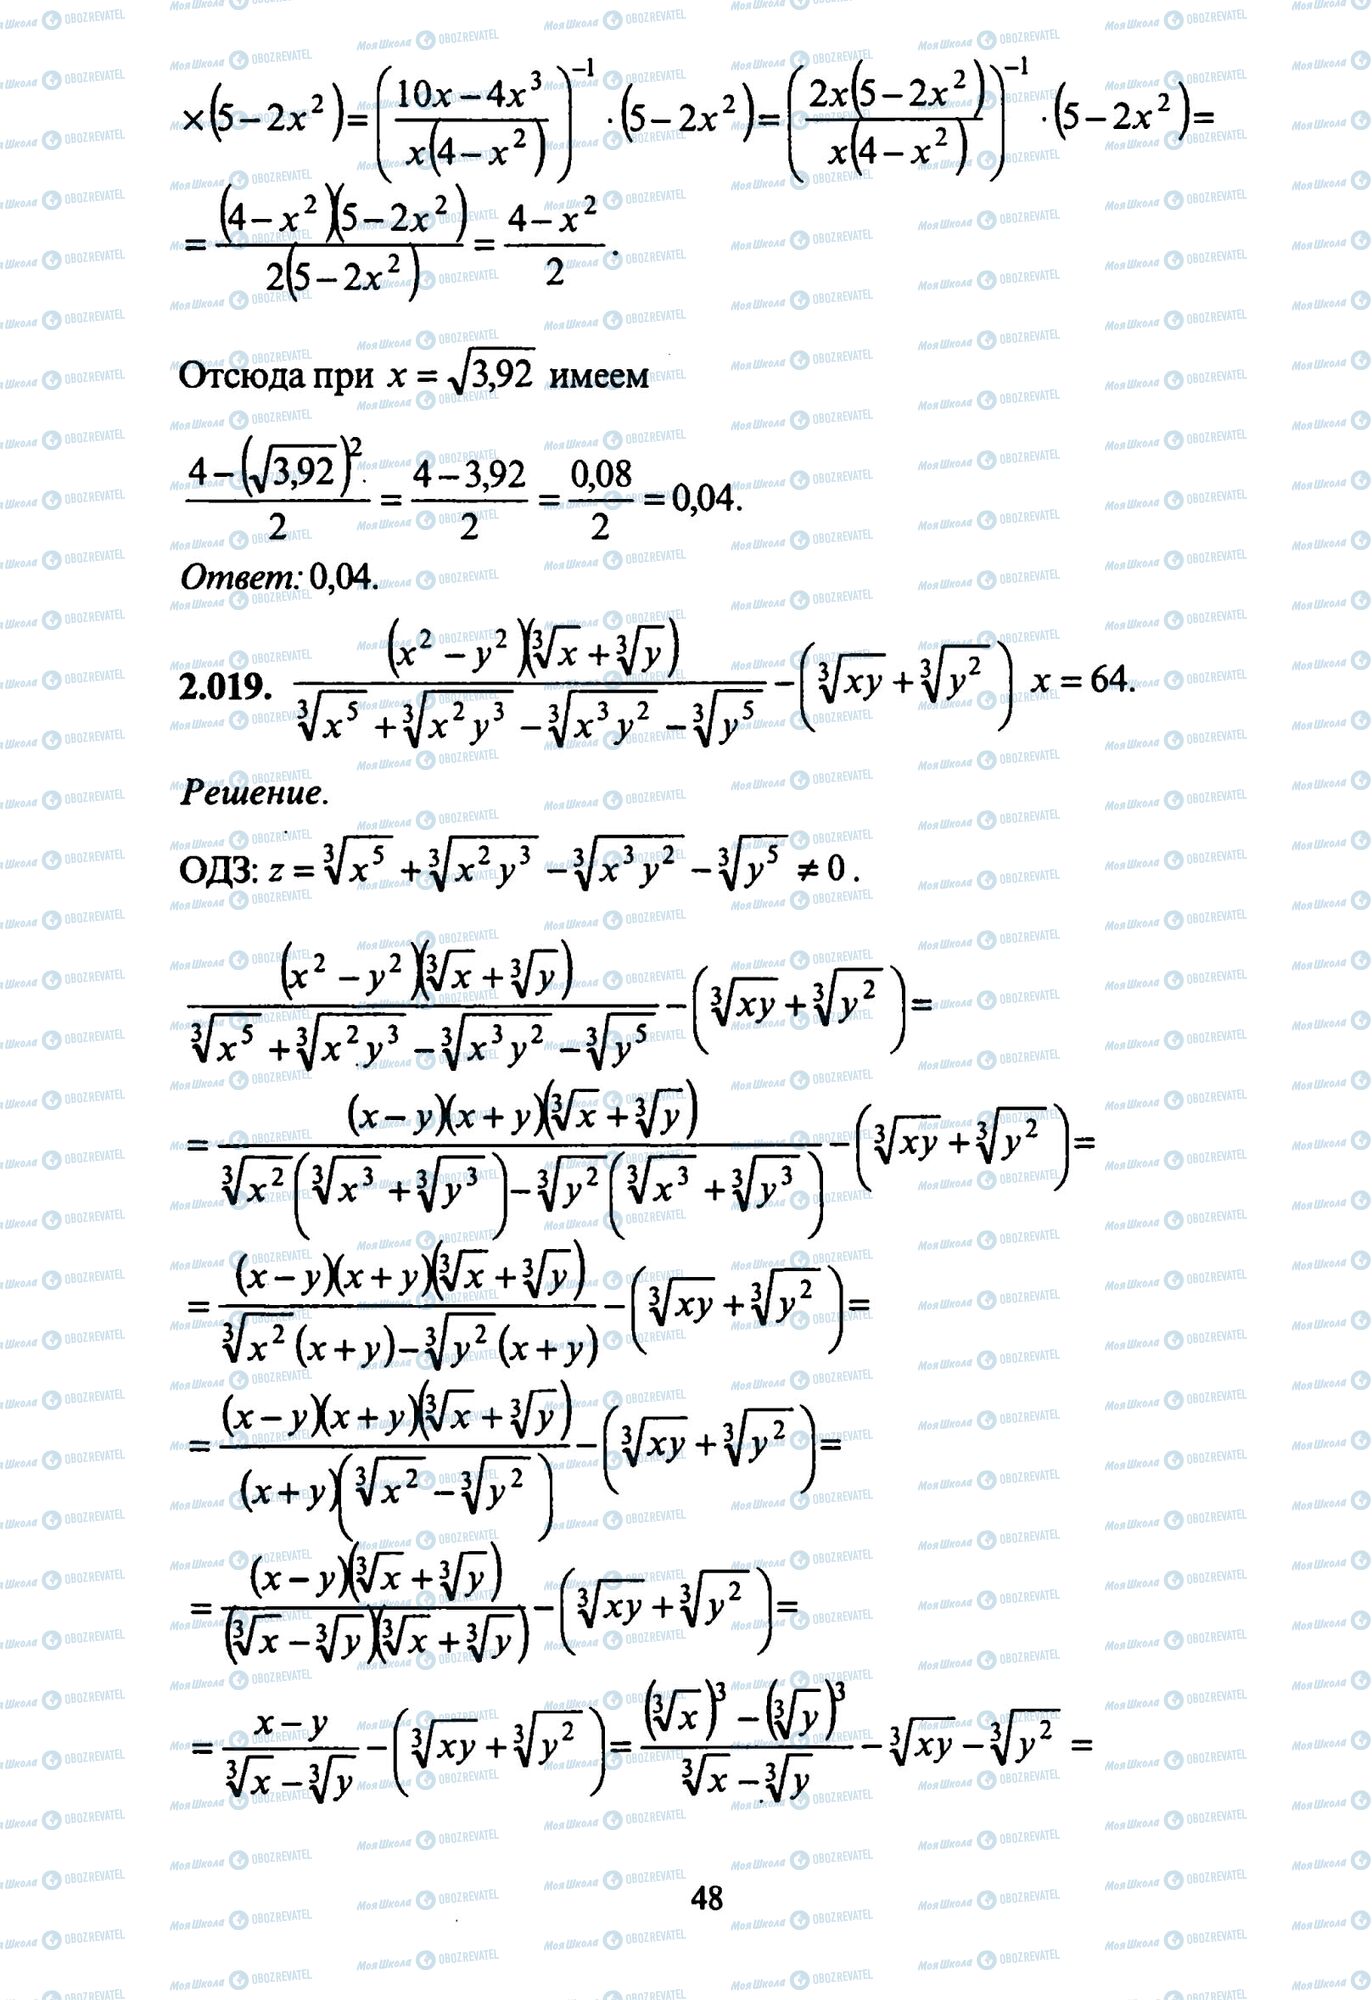 ЗНО Математика 11 класс страница 19-